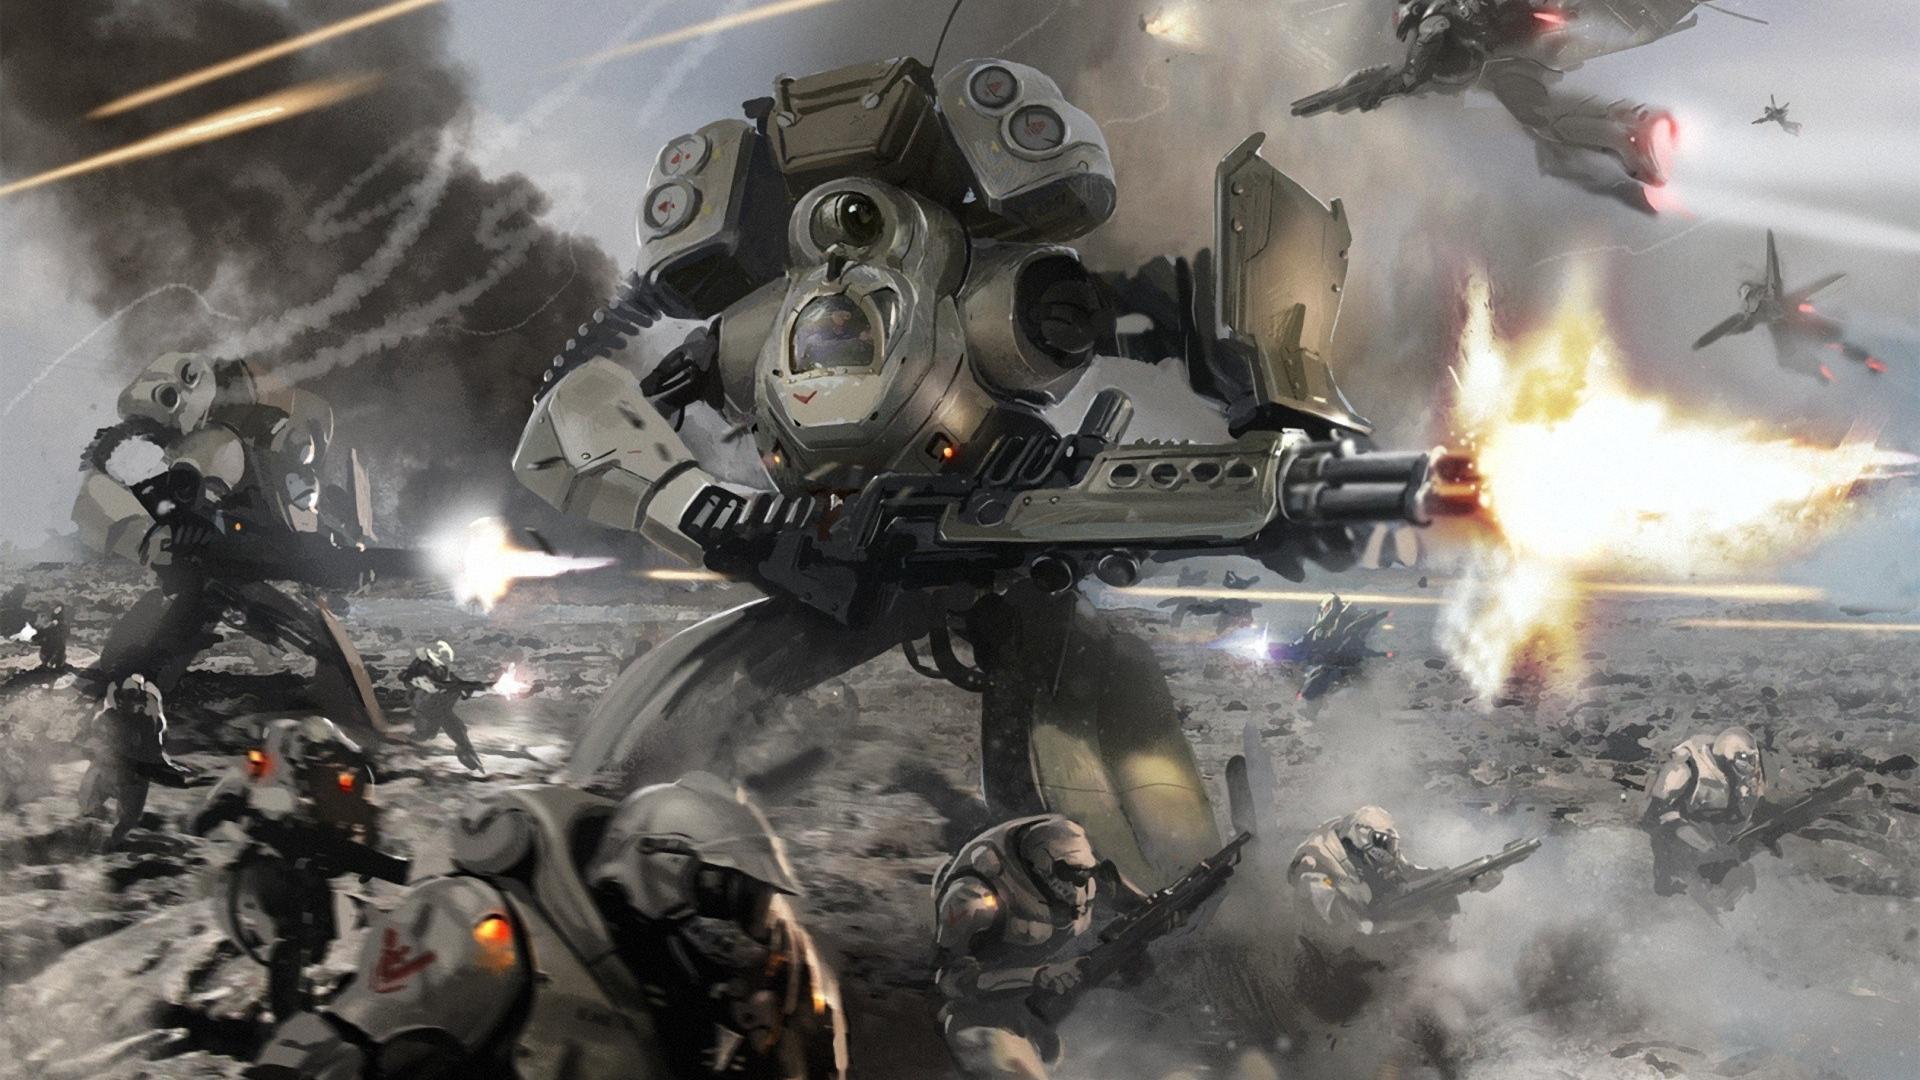 Fantasy Guns Explosions Warfare Mech Sci Fi Action Wallpaper